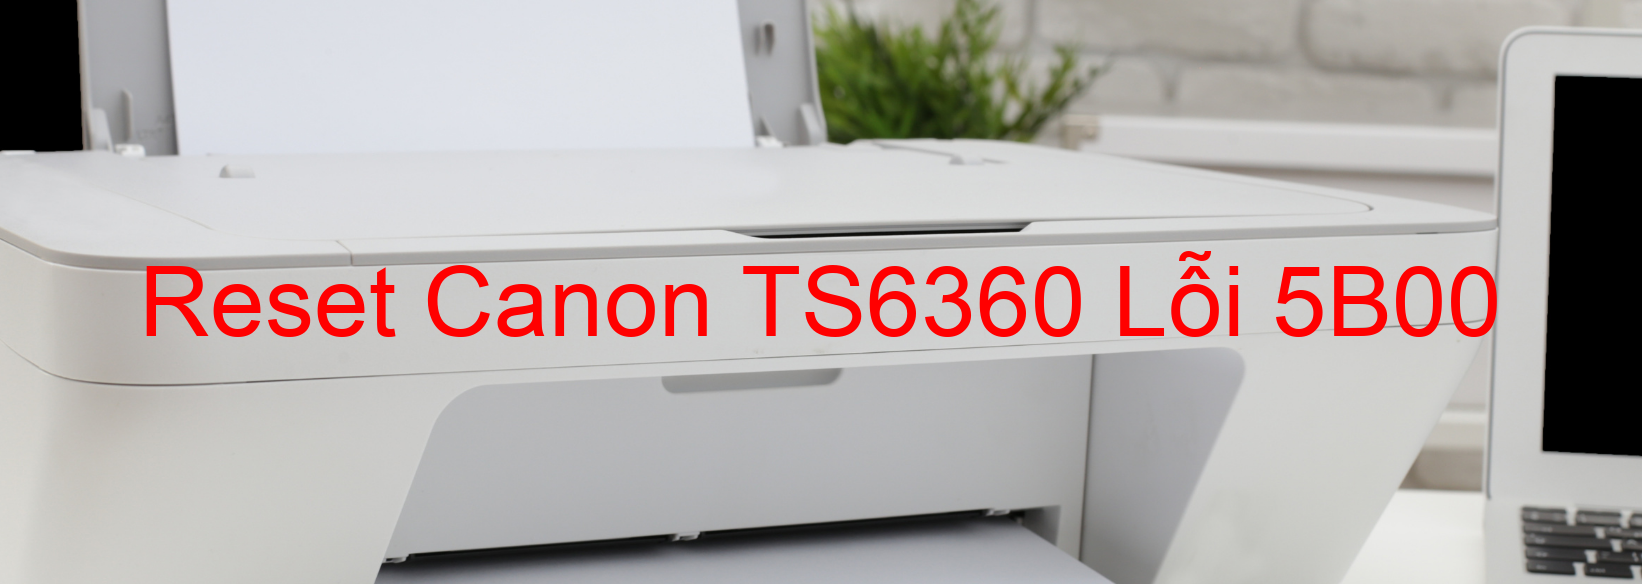 Reset Canon TS6360 Lỗi 5B00